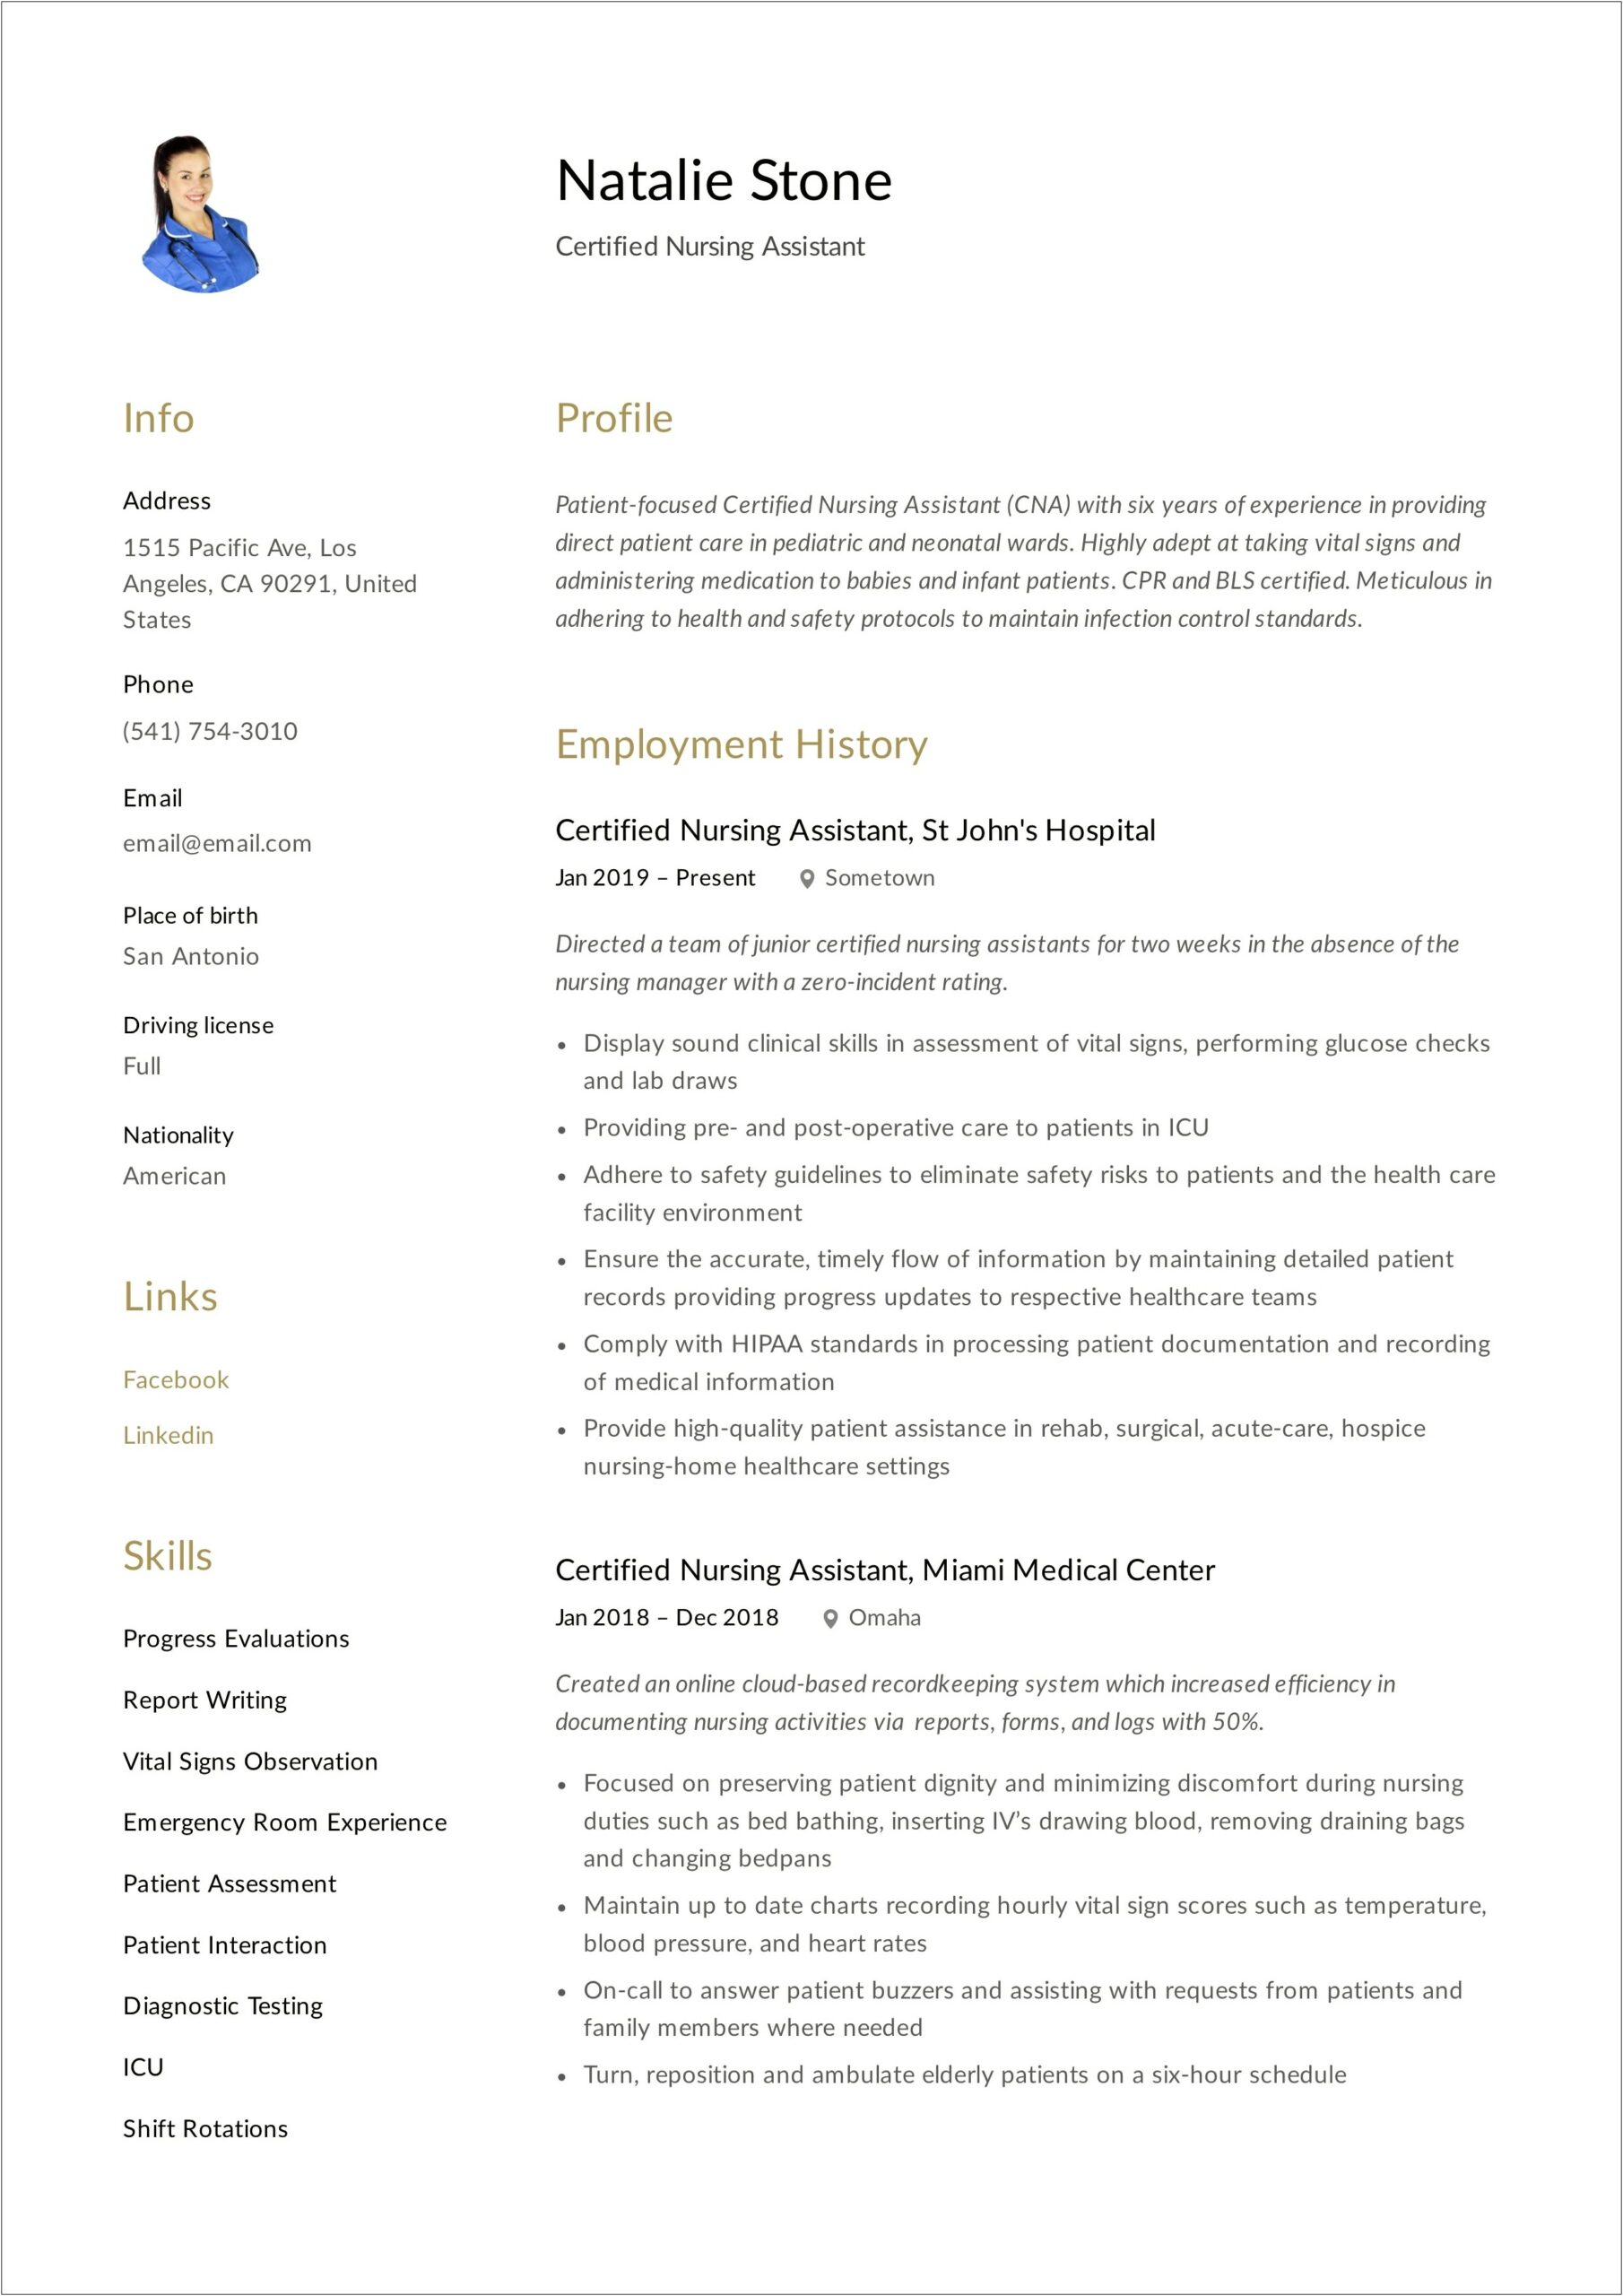 Resume For Certified Nursing Assistant Objective